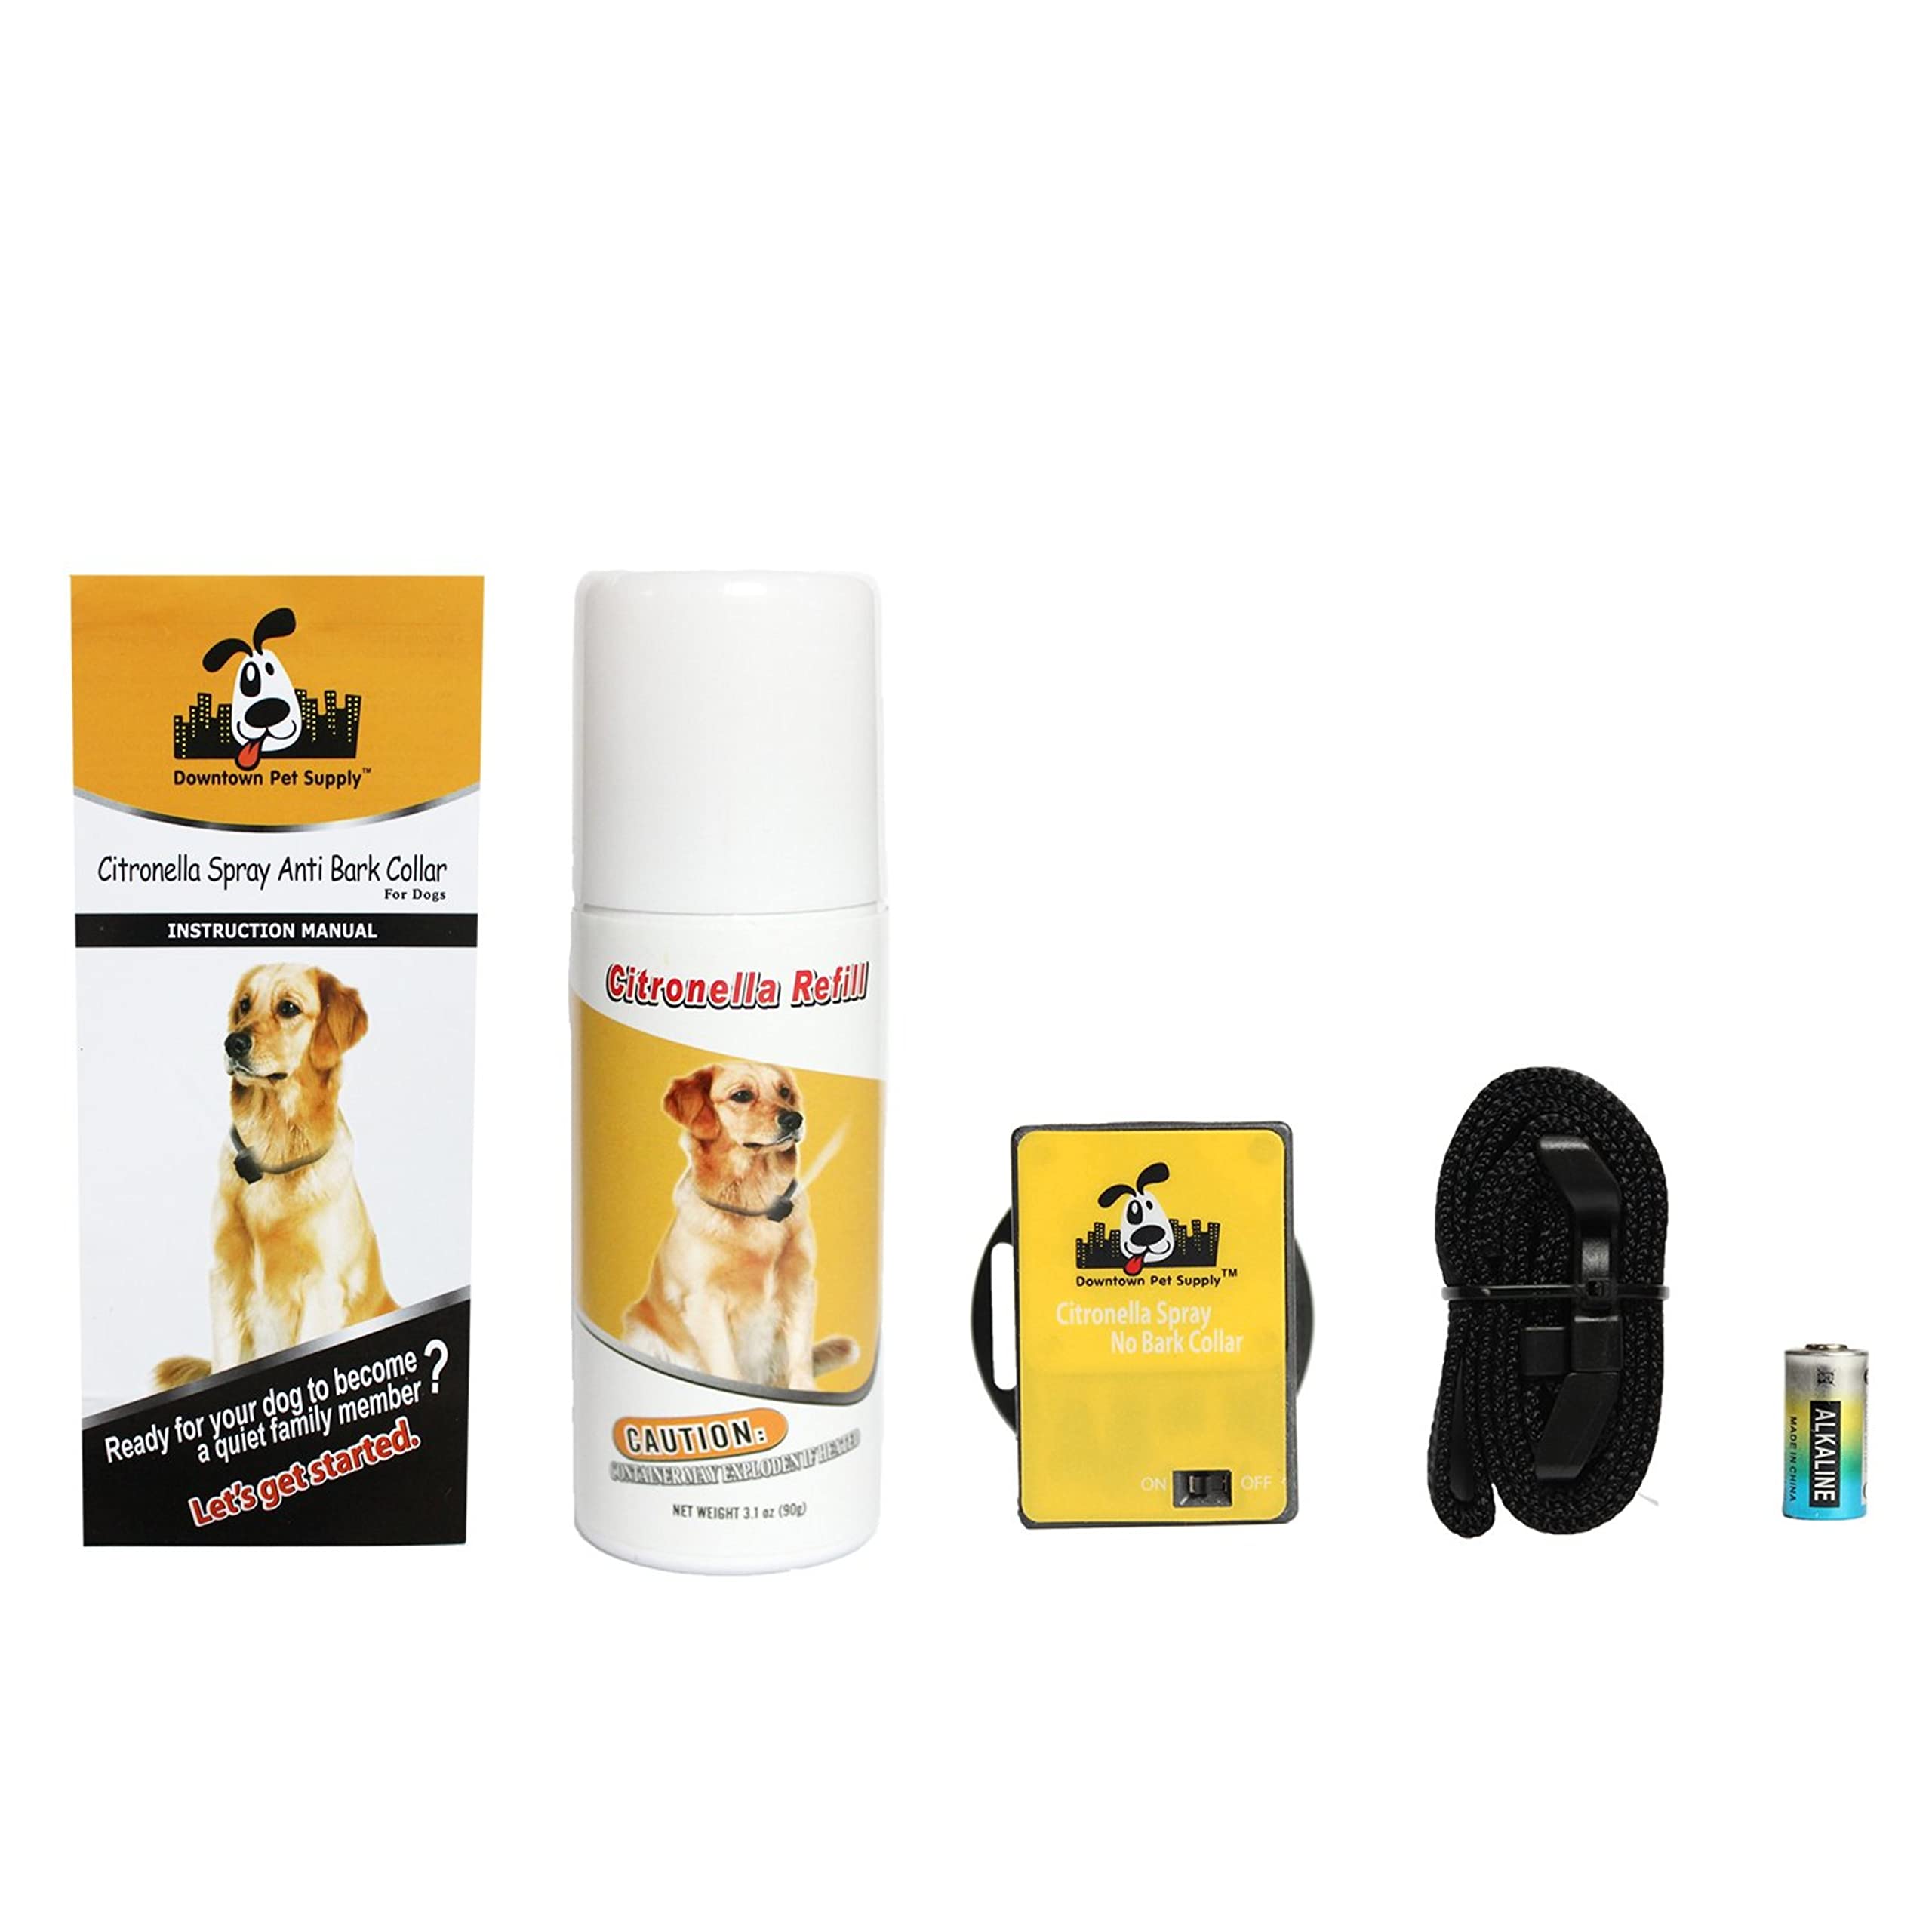 Downtown Pet Supply - Citronella Dog Collar - Humane No Bark Collar Set with Citronella Spray - No-Shock - Collar, Spray Device, Citronella Spray Refill, Battery & Manual - 1 Pack